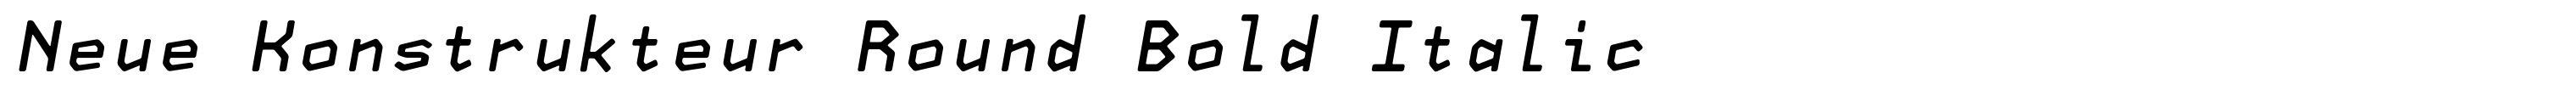 Neue Konstrukteur Round Bold Italic